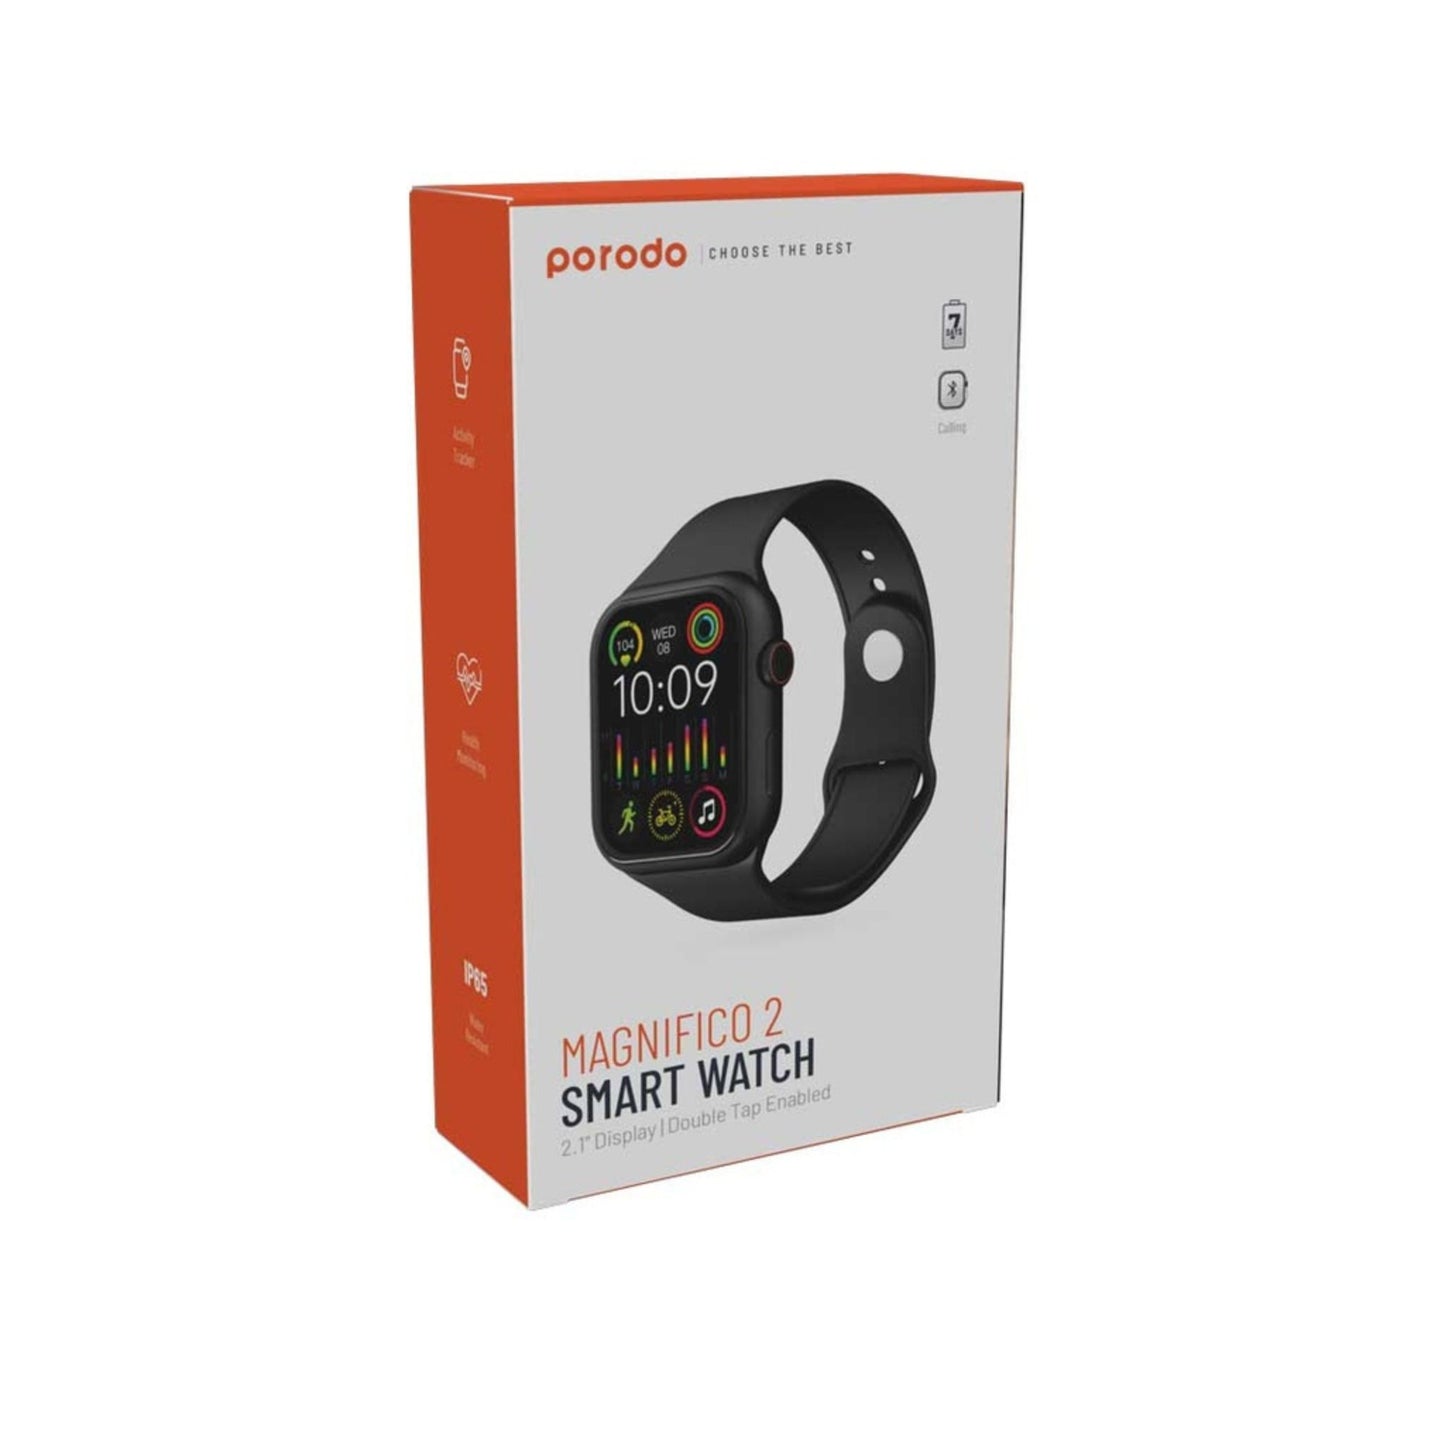 Porodo Smartwatch 2.1 Magnifico with Sport Band - Black